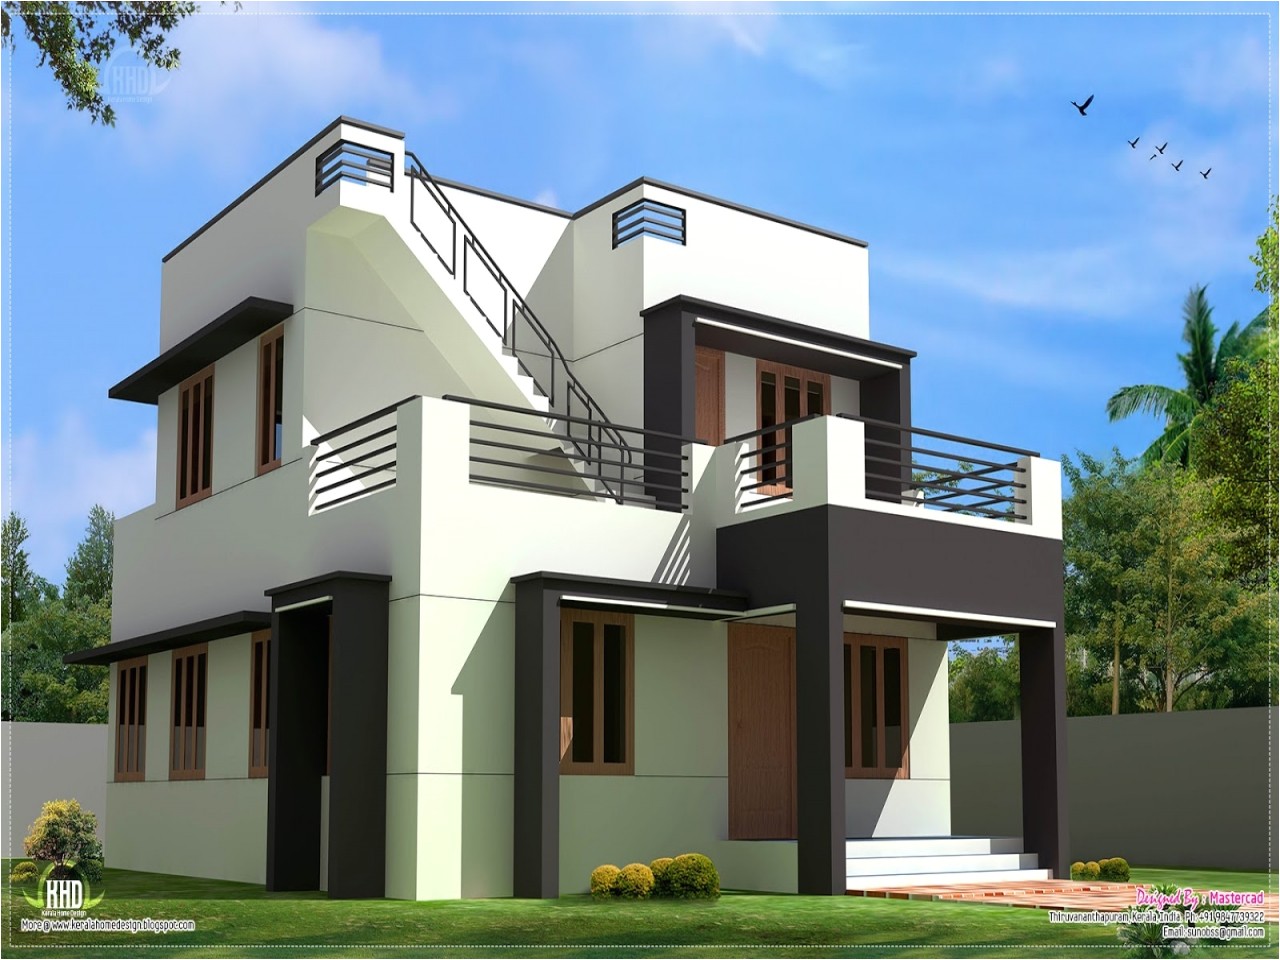 7f6c11c2c24da661 shipping container homes interior design design home modern house plans